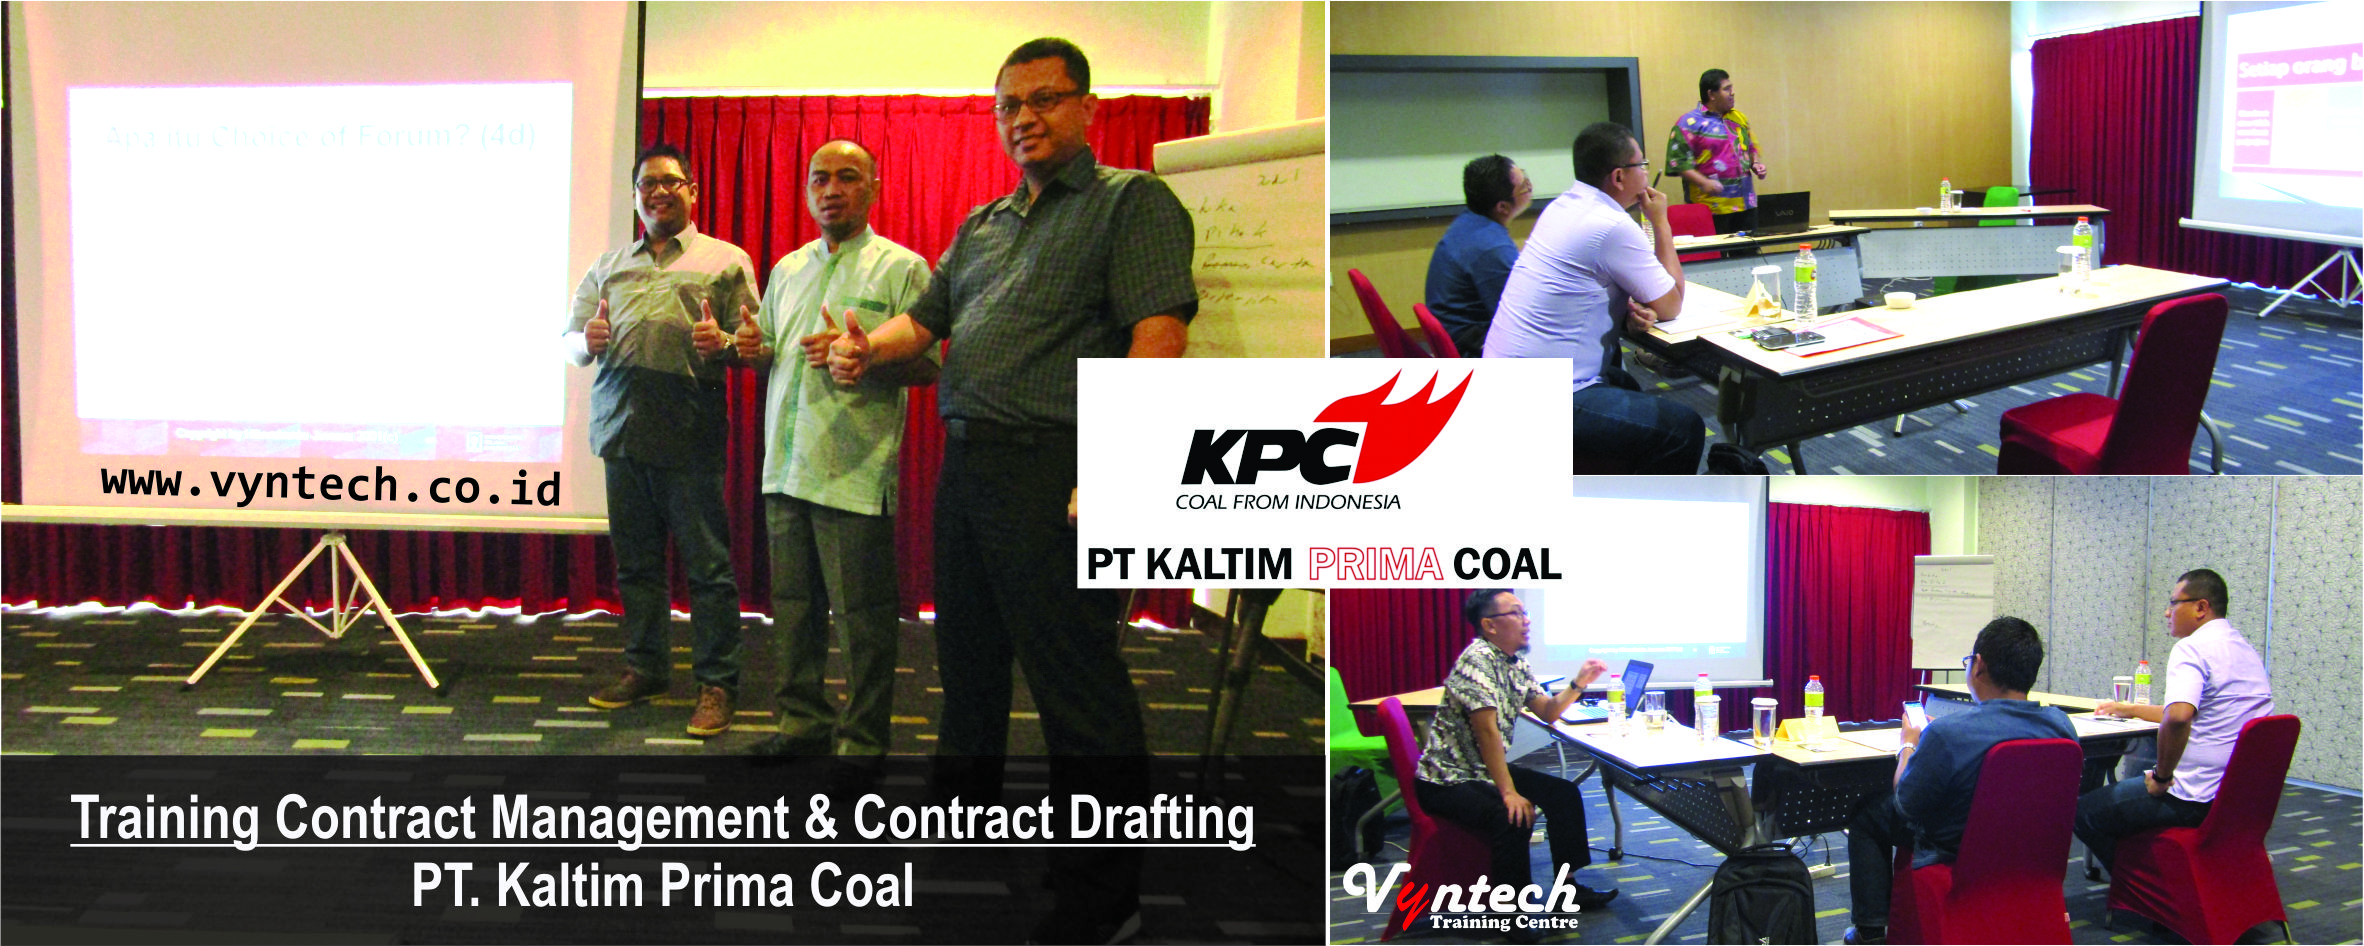 20180306 Training Contract Management & Contract Drafting - PT KPC Kaltim, di Yogya